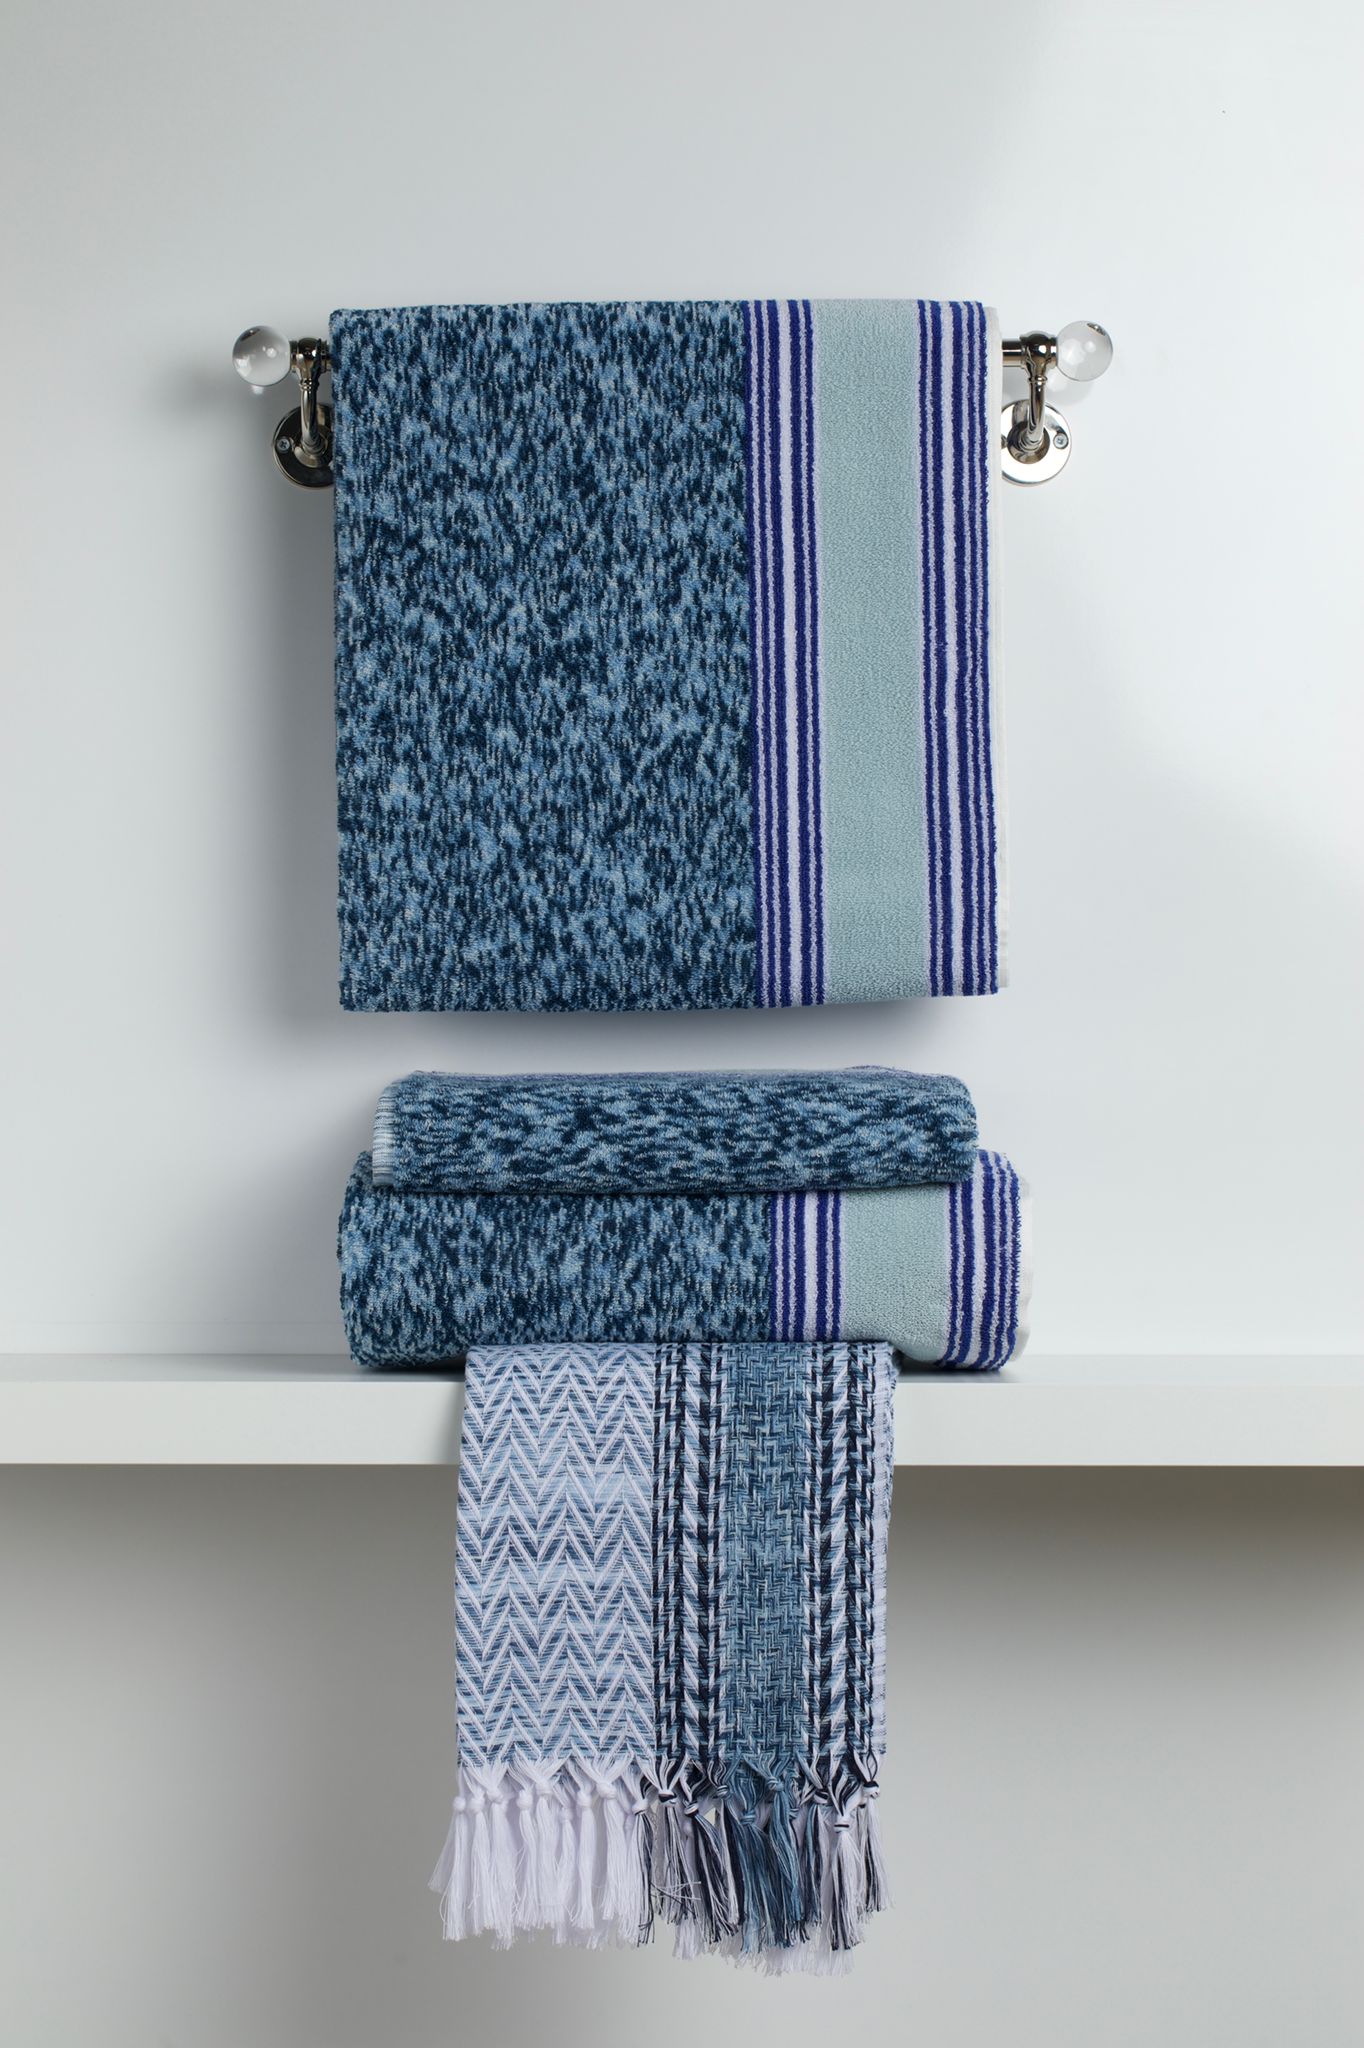 Turkish Cotton Towel - ARTG AR038